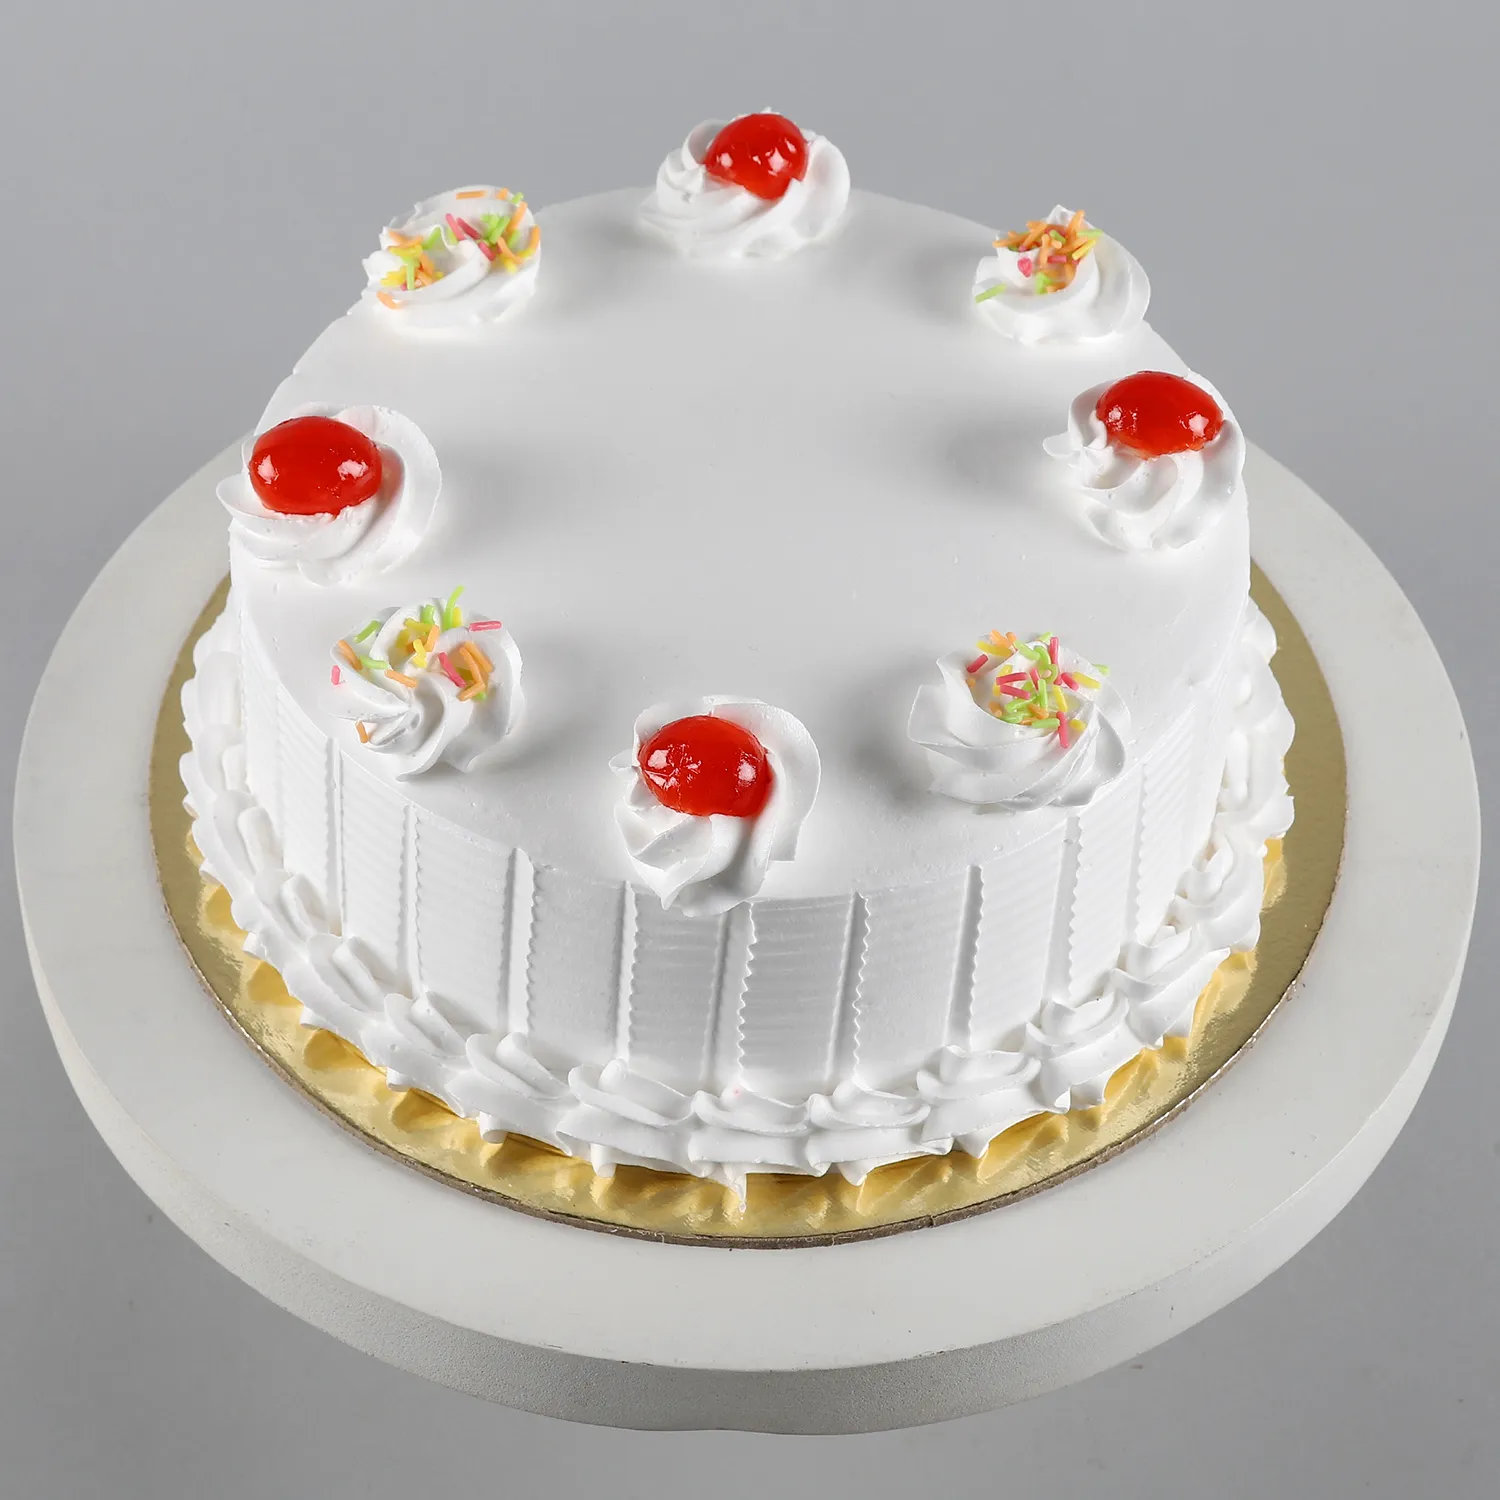 Happy Wedding Anniversary Cake - 1.5 KG